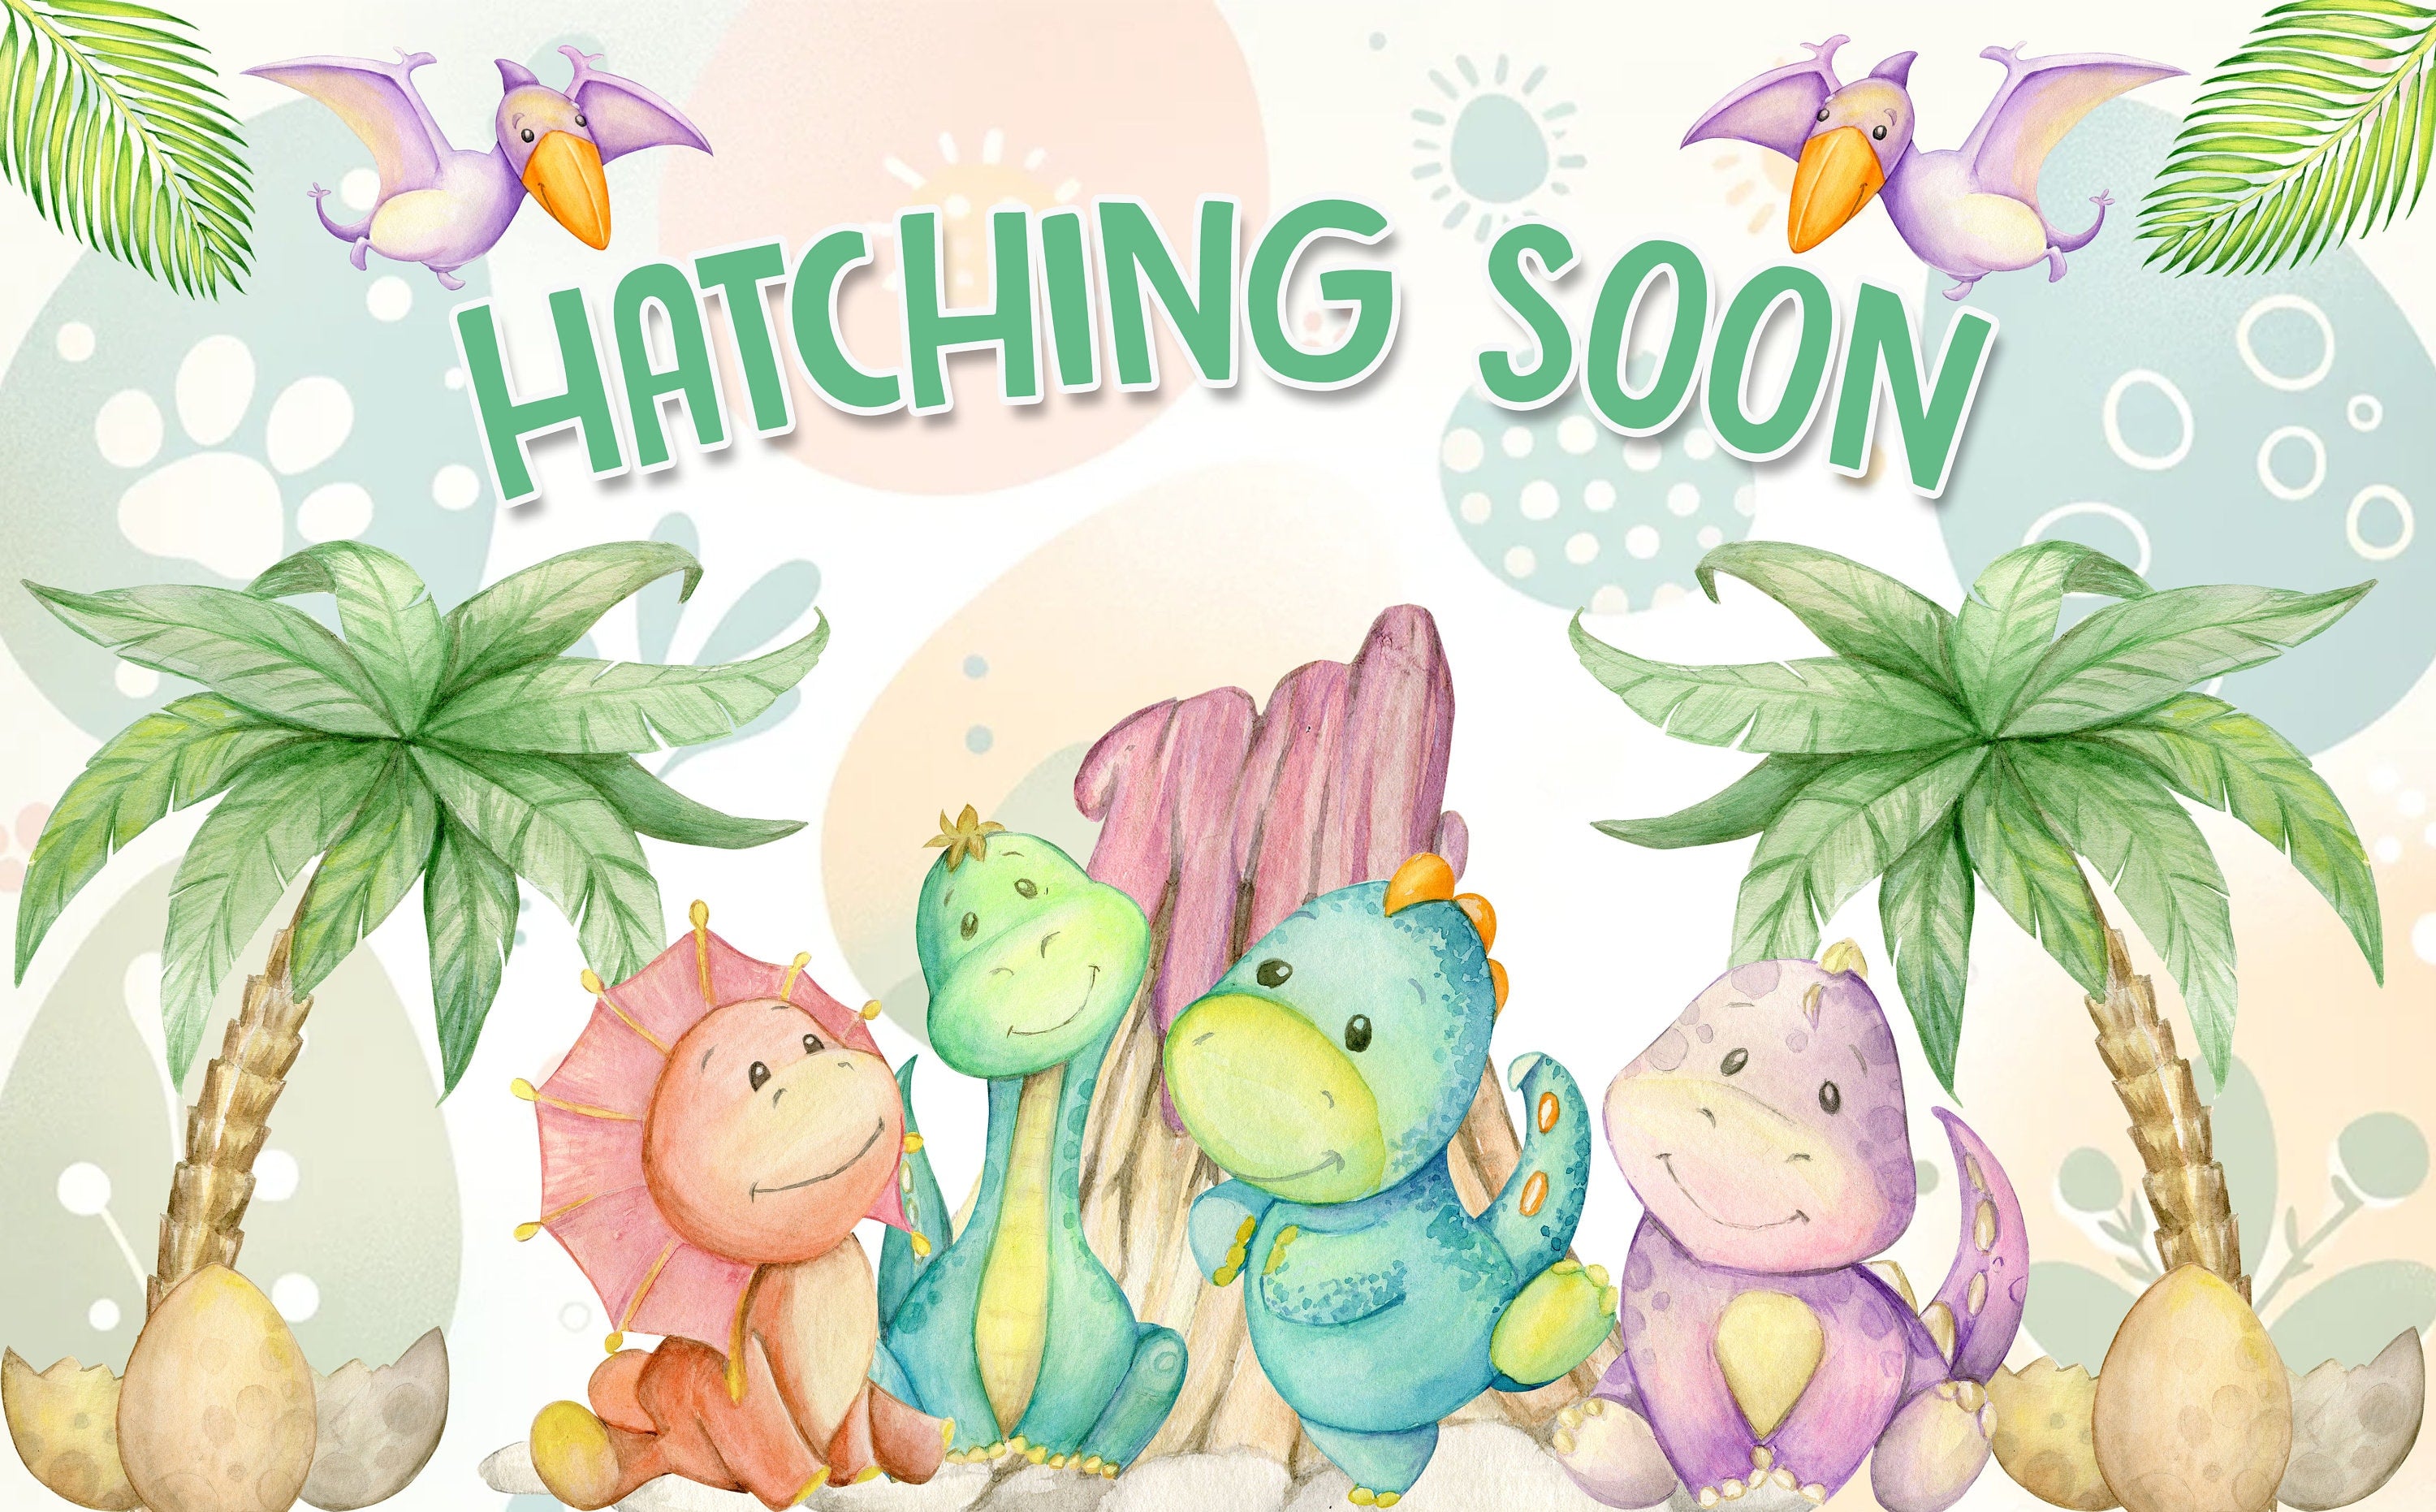 "Hatching Soon" Dinosaur Baby Shower Backdrop 5x3 FT - Prehistoric Celebration Decor